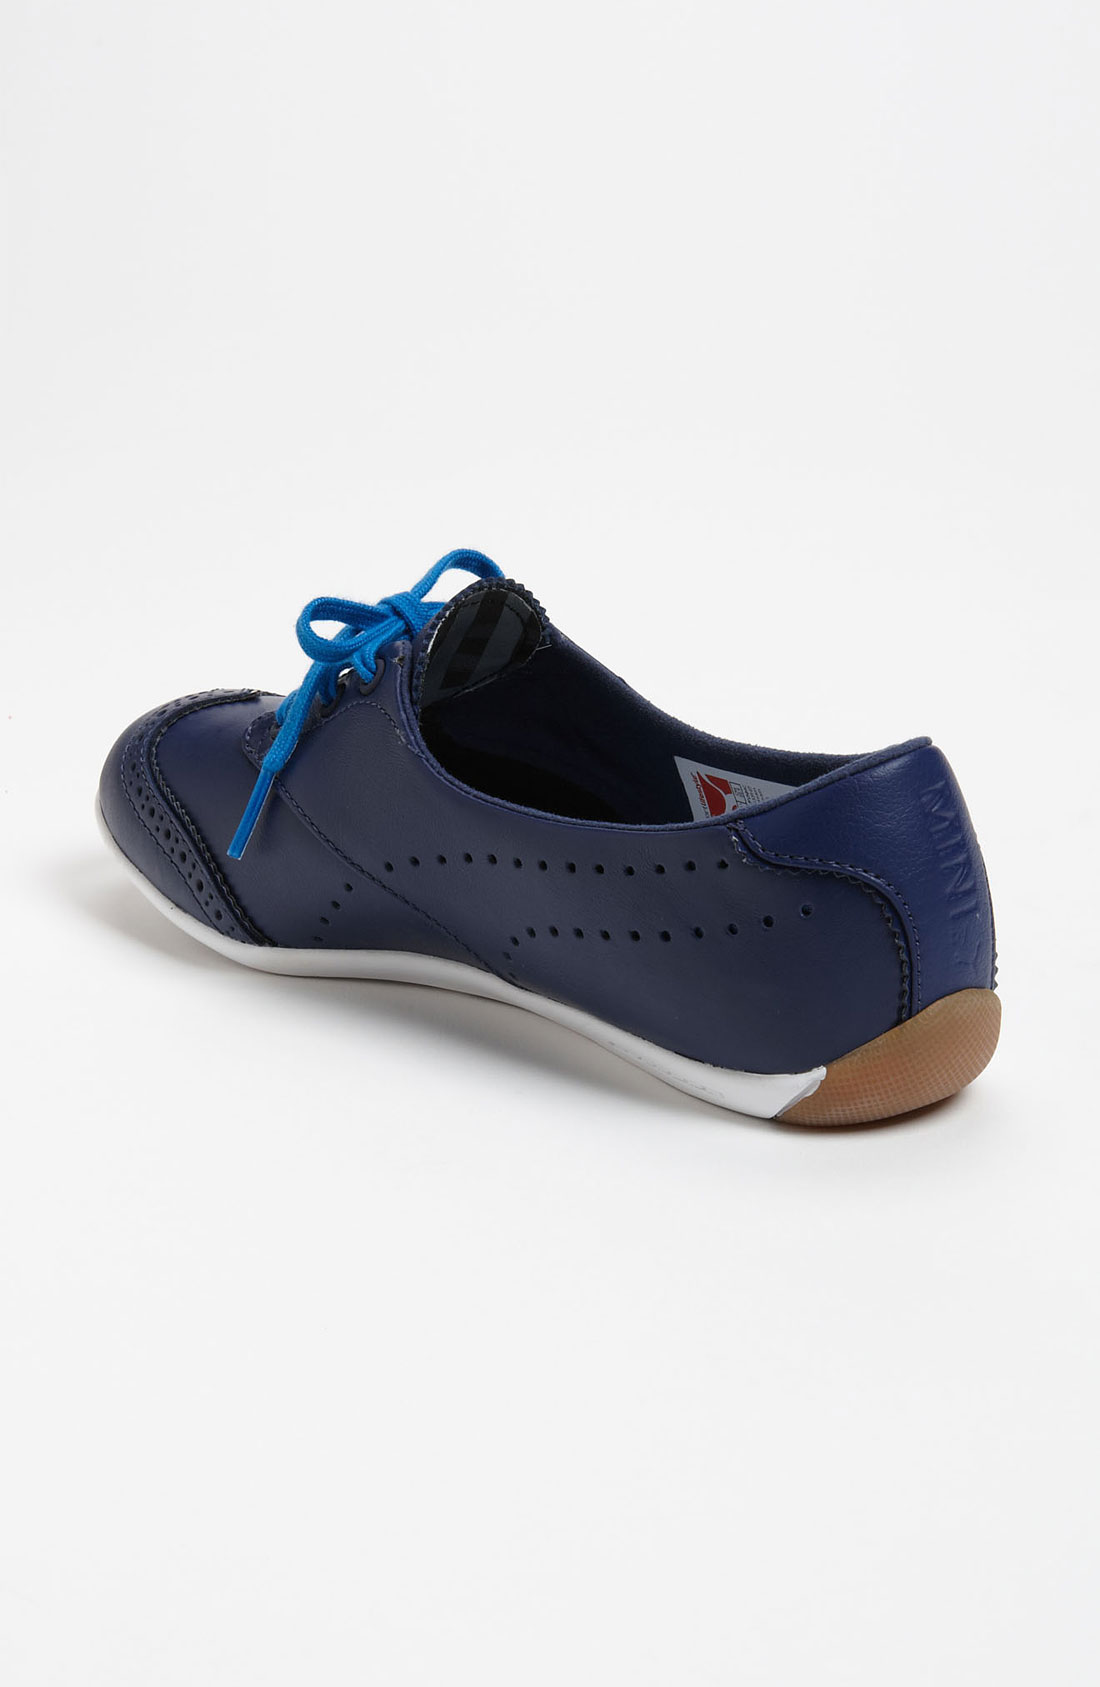 puma medieval blue & white lifestyle shoes